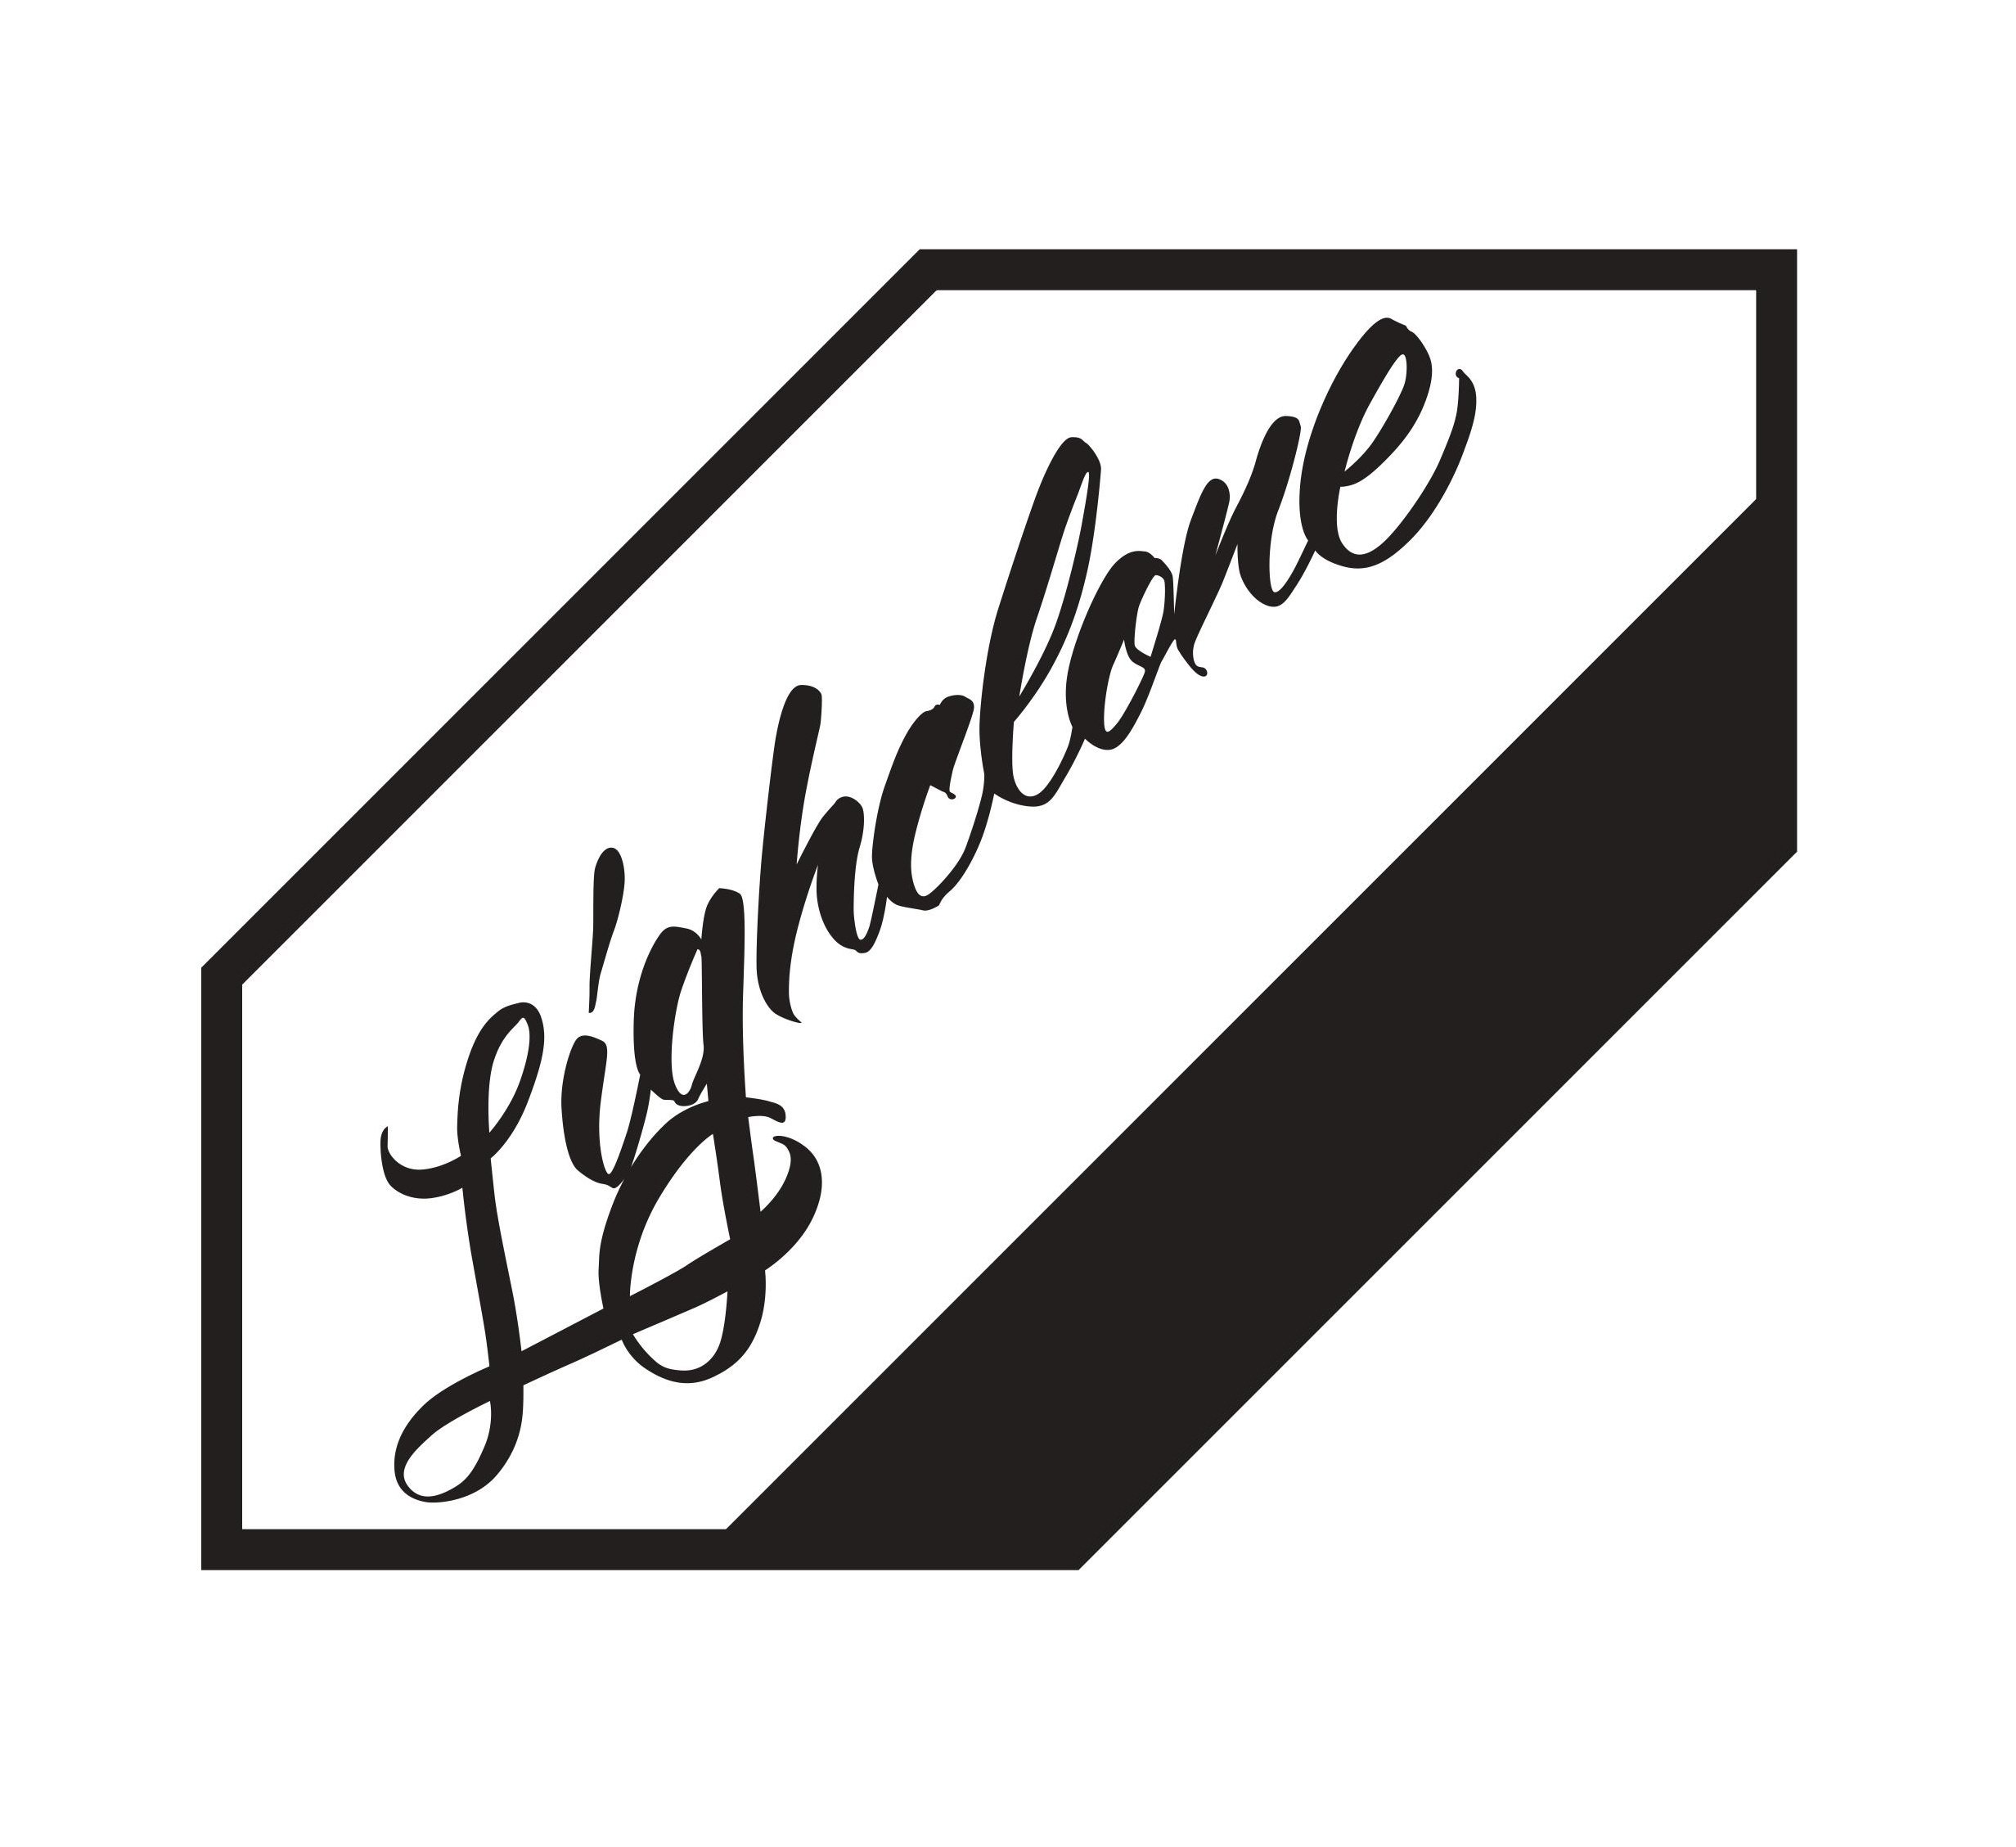 Lighclone Clothing Store